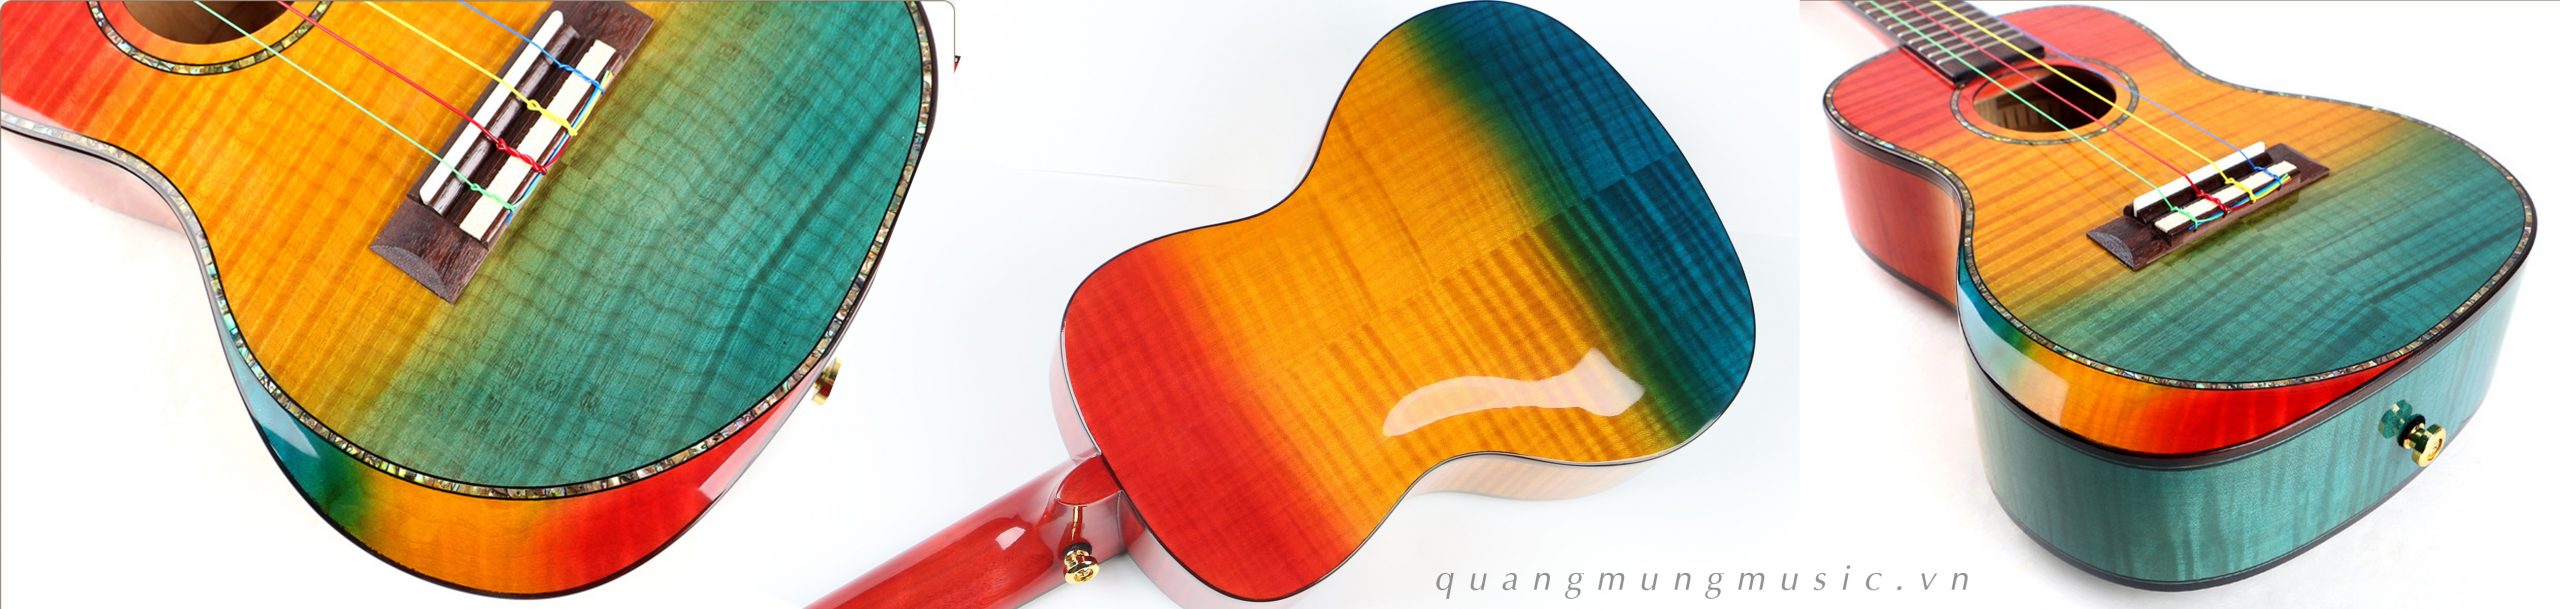 dan-ukulele-concert-23-inch-cao-cap-mau-cau-vong